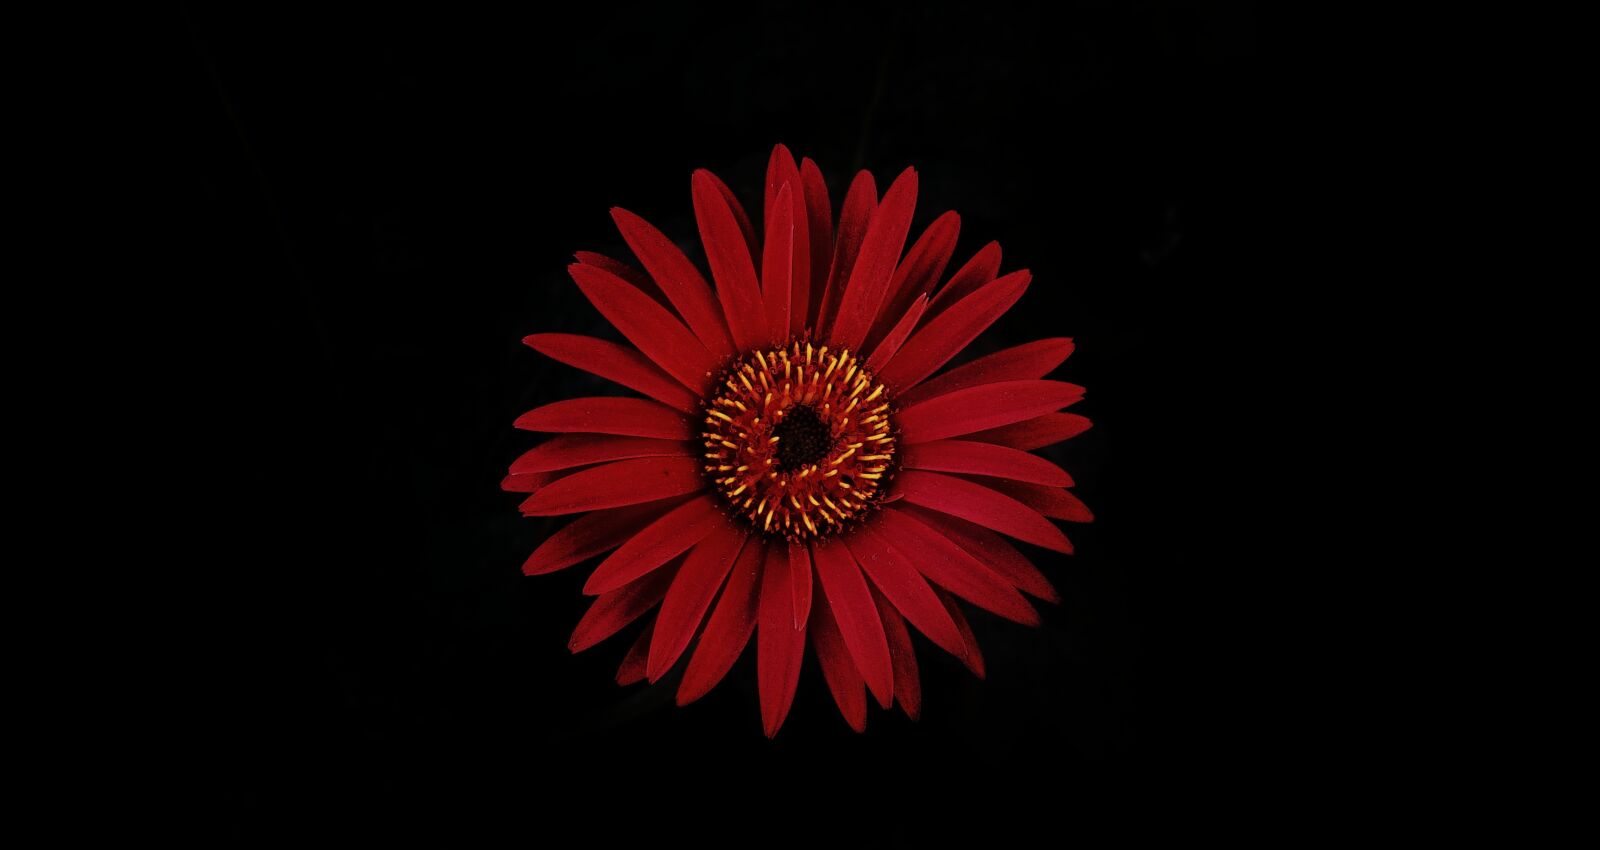 HTC ONE X9 DUAL SIM sample photo. Flower, flora, beauty photography